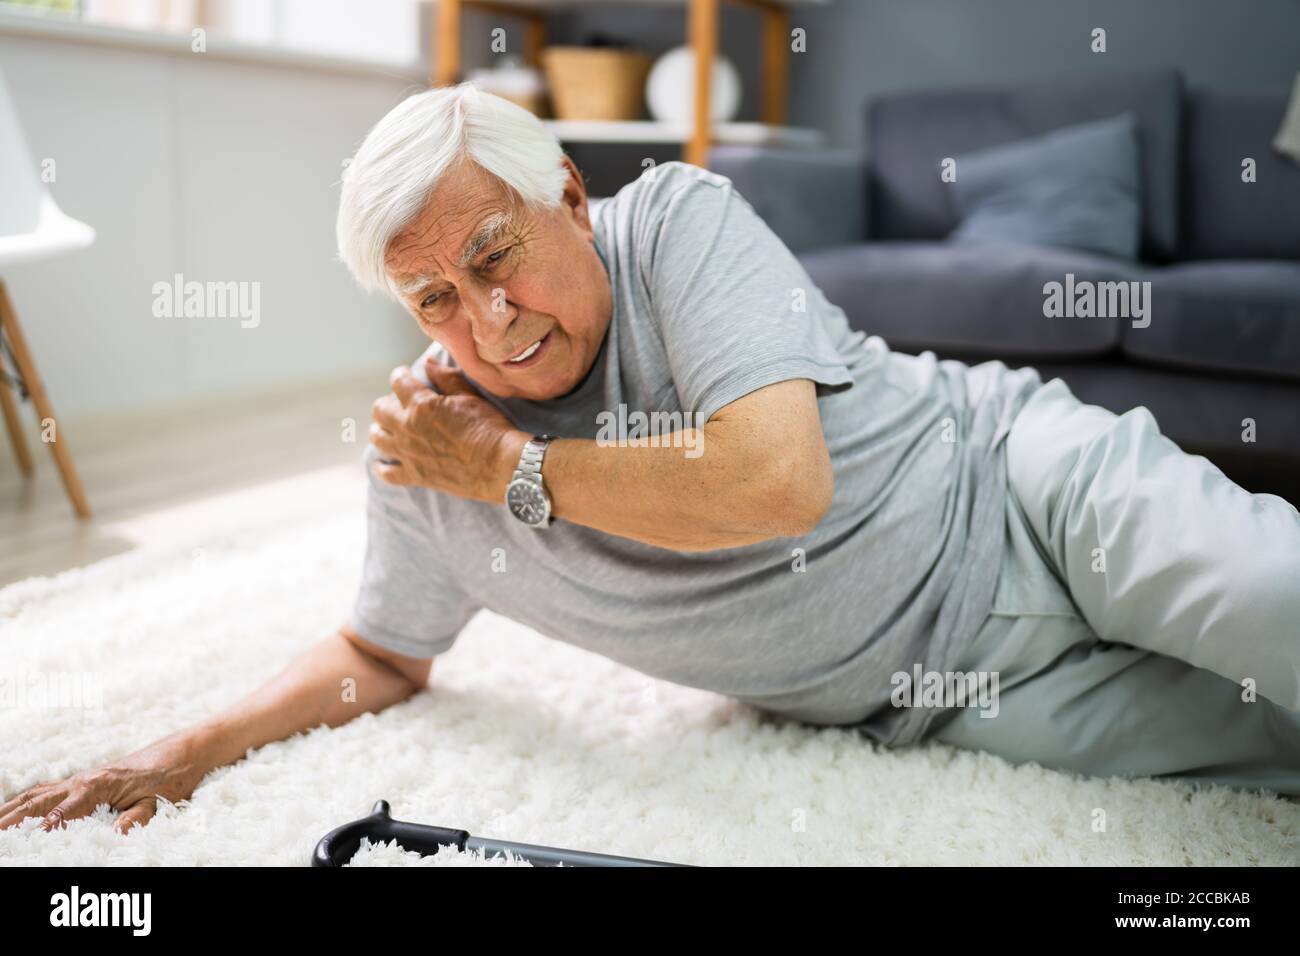 Elderly Senior Man Slip And Fall. Fallen Old Person Stock Photo